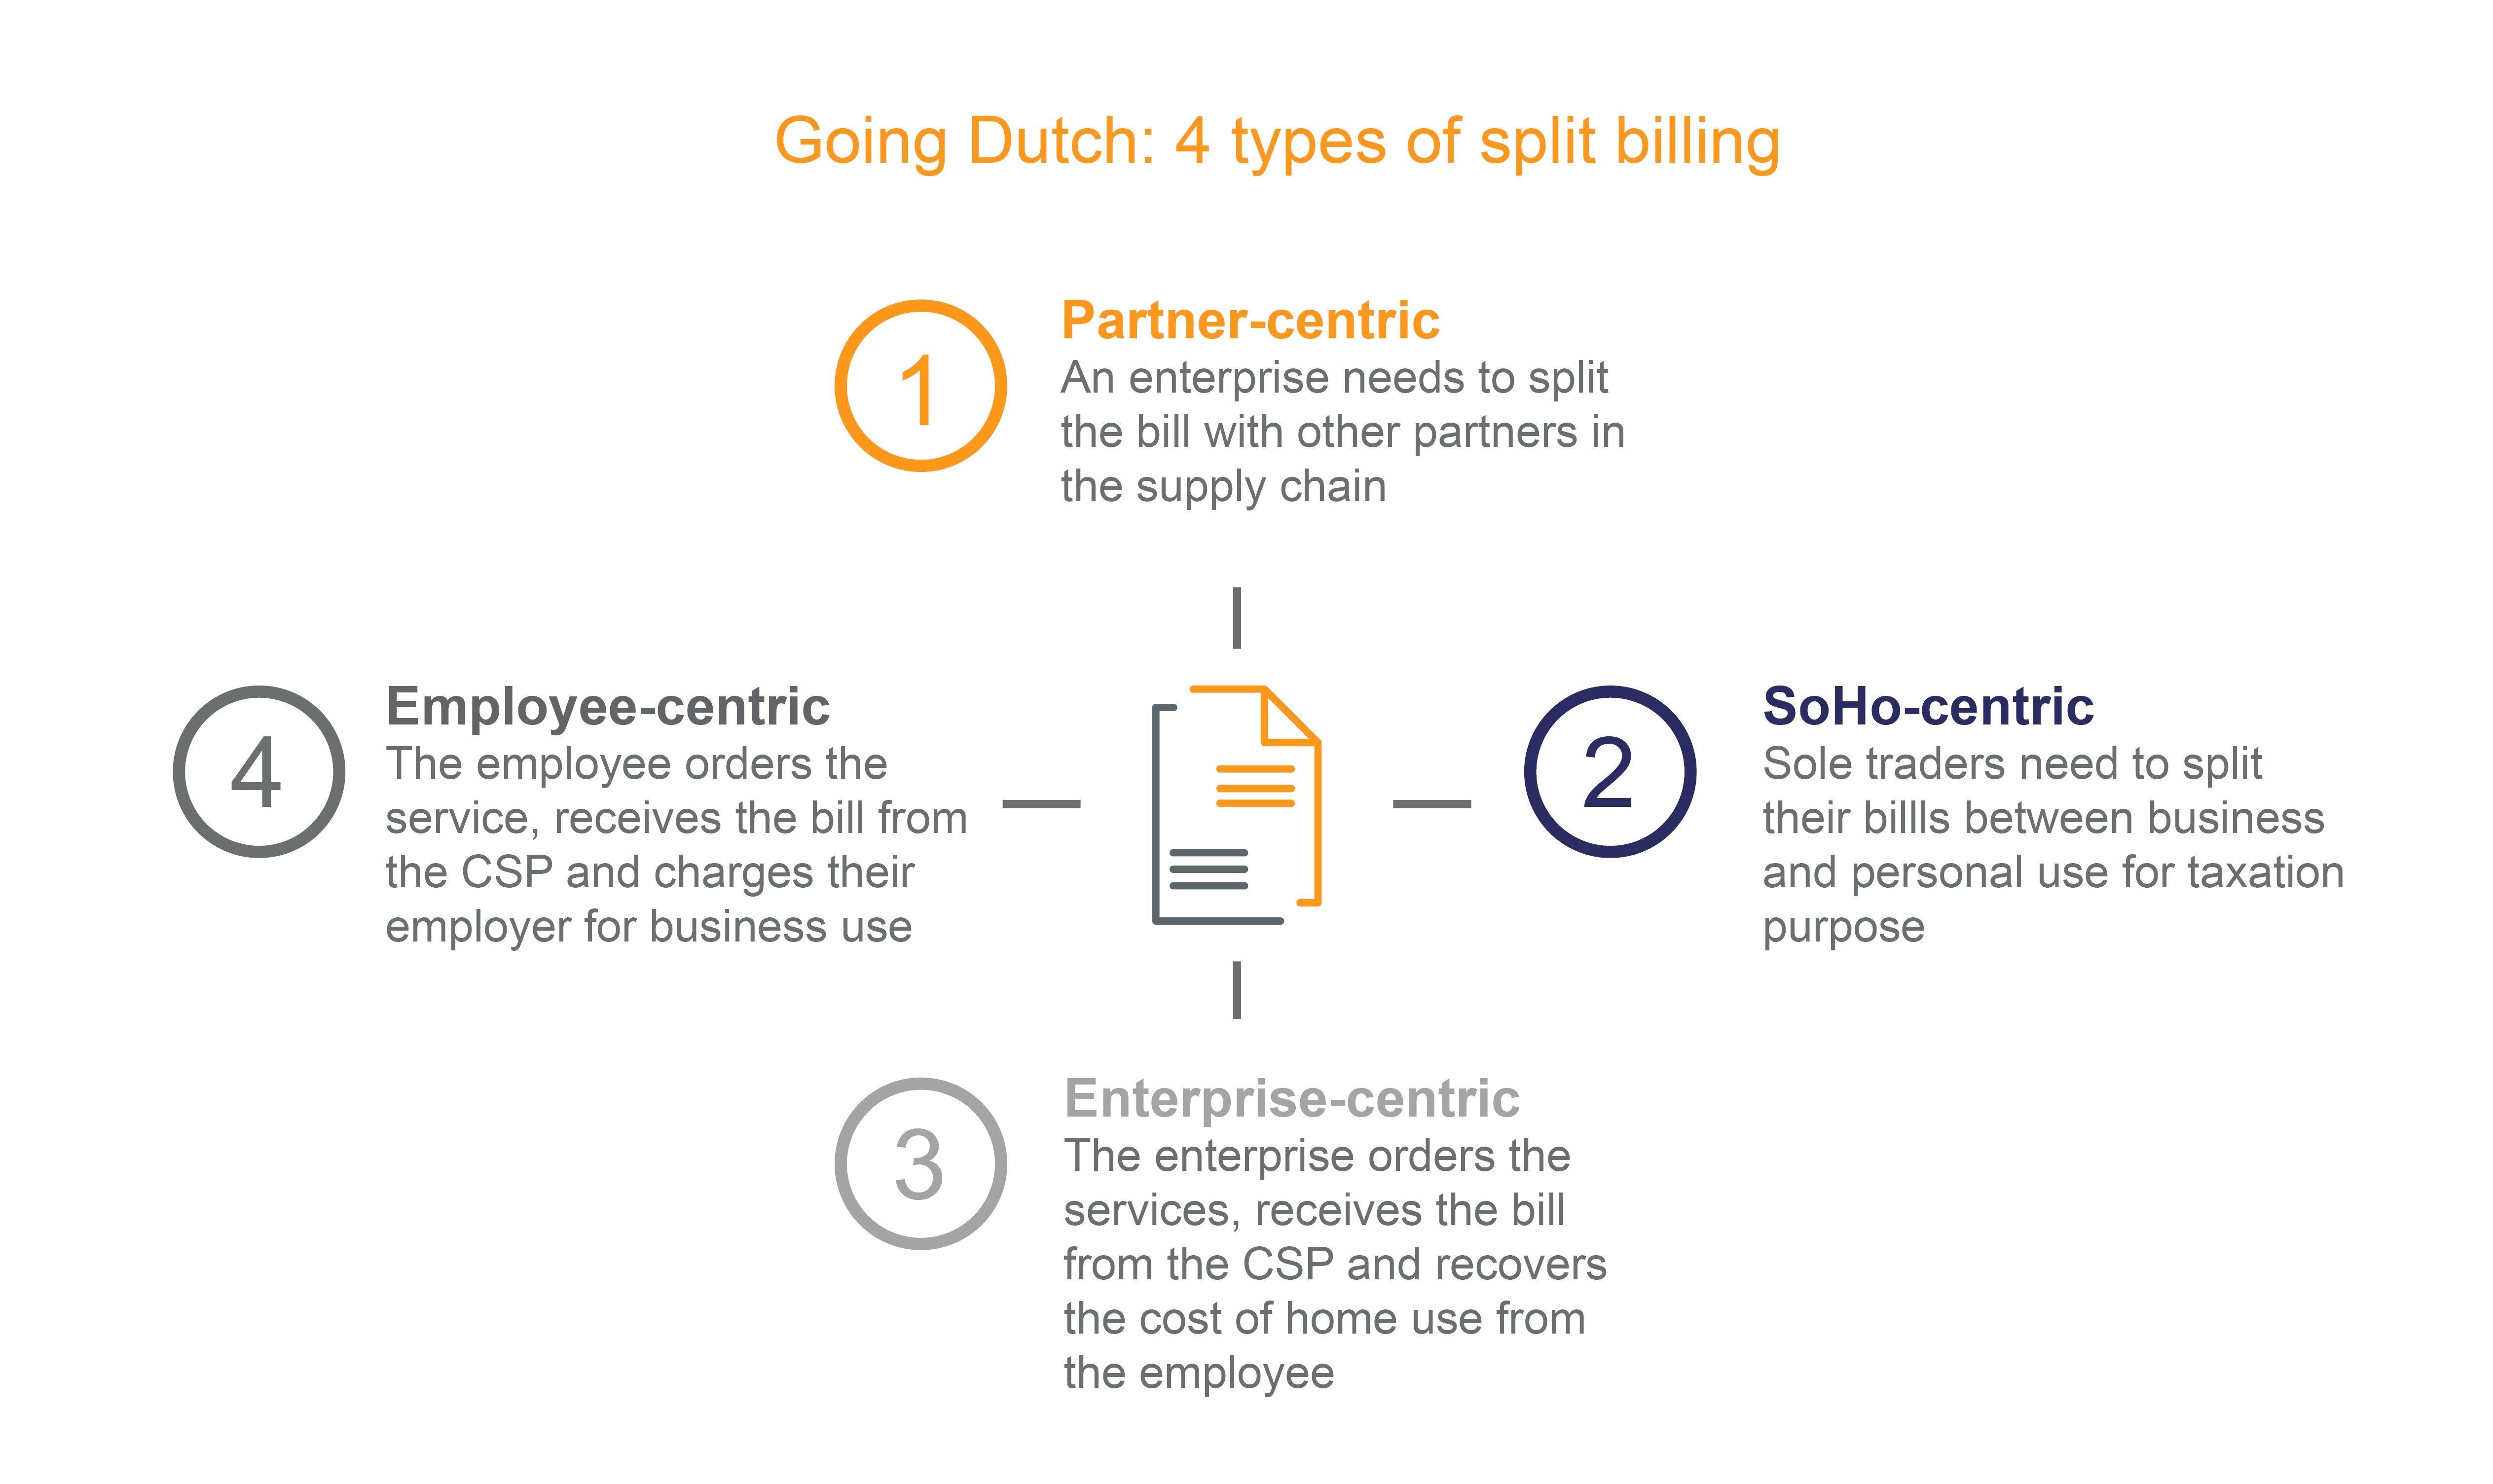 Going Dutch the strategic importance of split billing